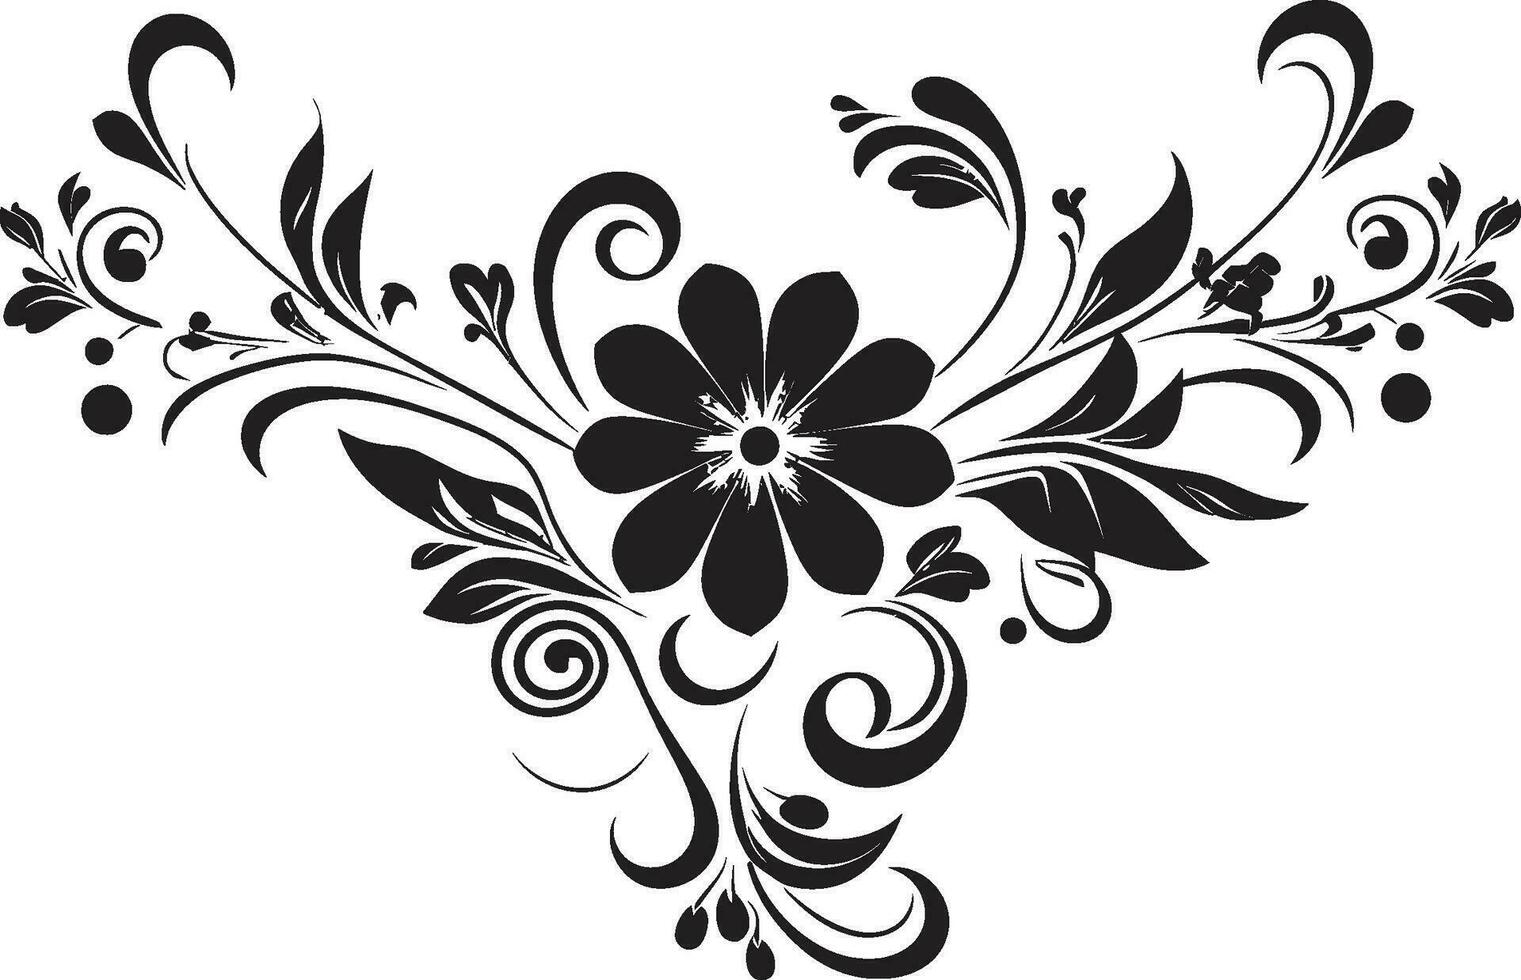 årgång blommig krångligheter handgjord svart emblem noir kronblad skönhet hand återges vektor logotyp design